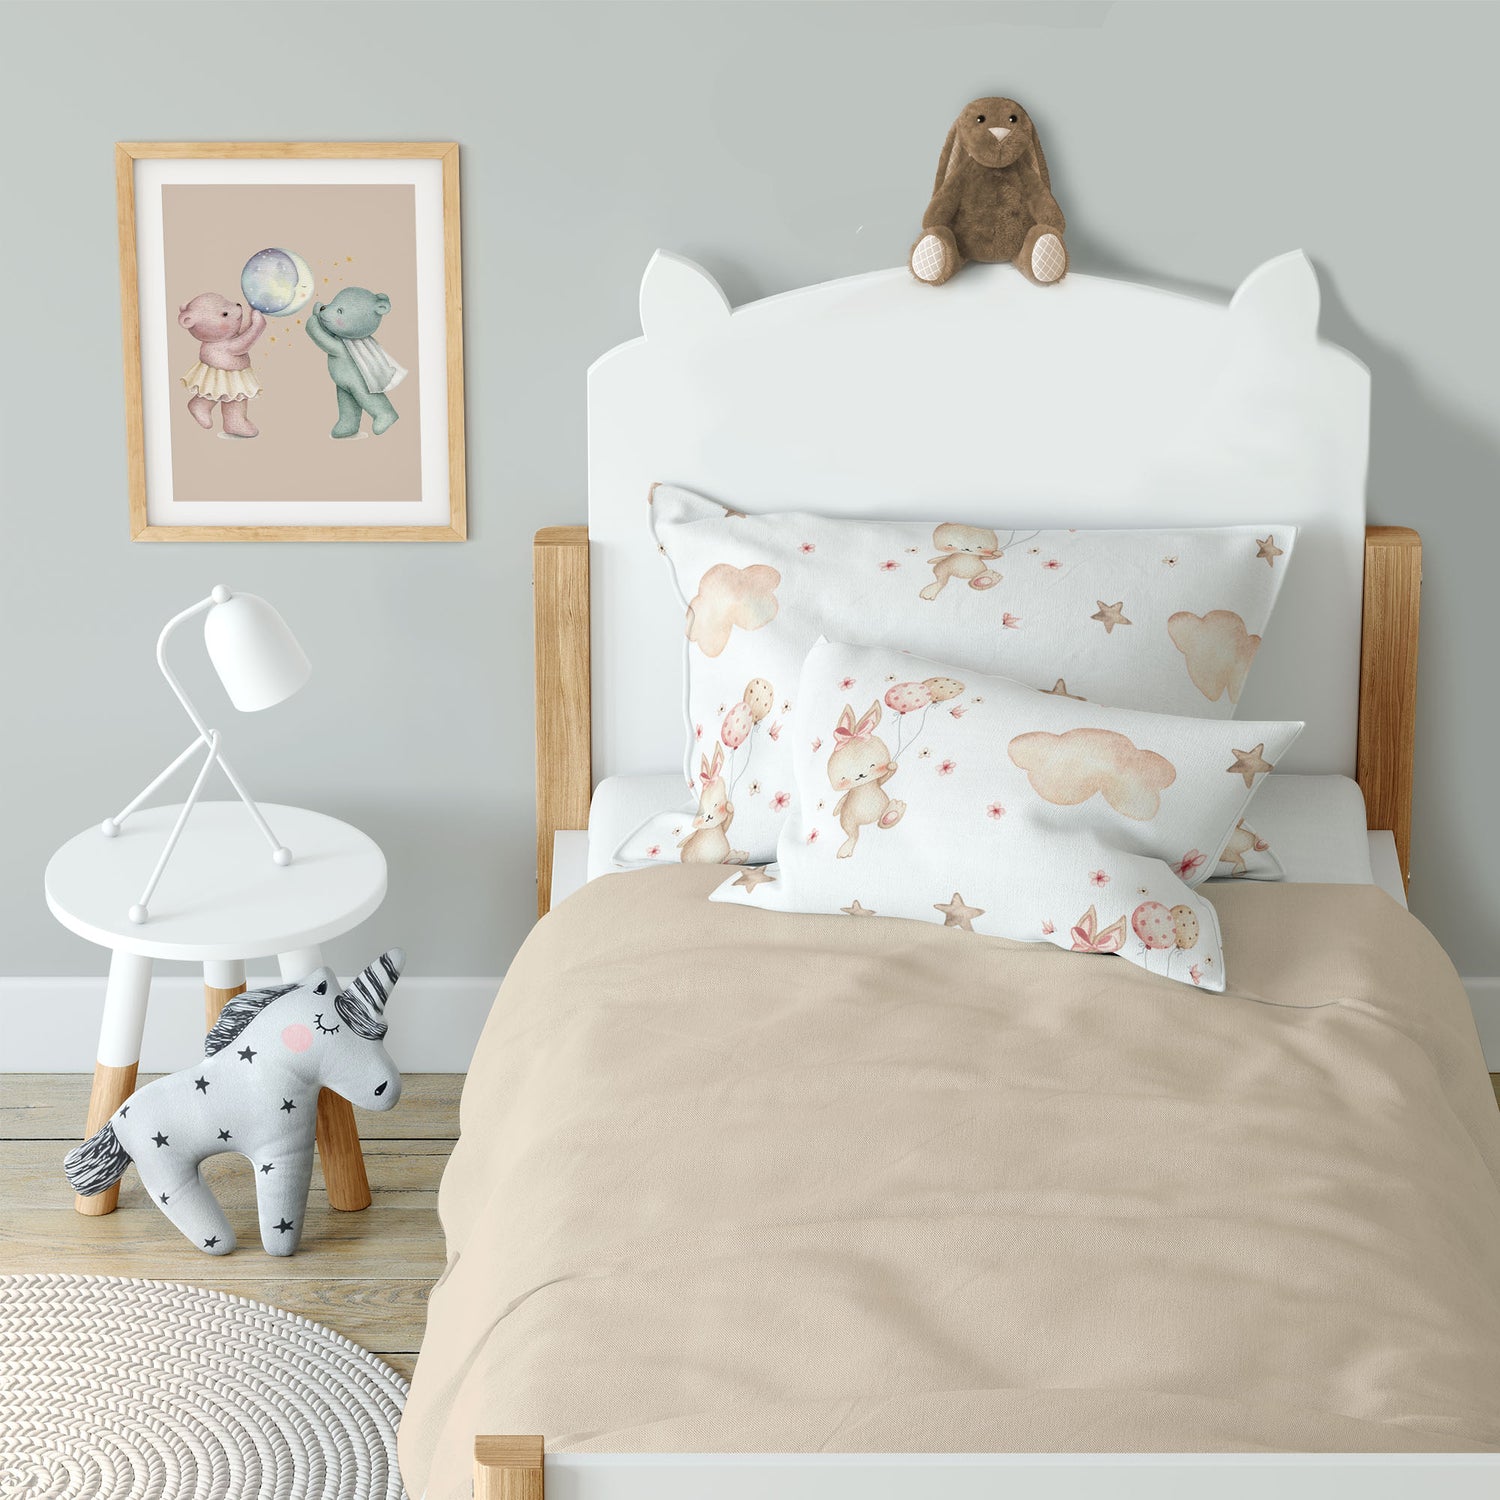 Traumhase” luxuriöse Kinderbettwäsche 100% aus – Baumwolle Leslis